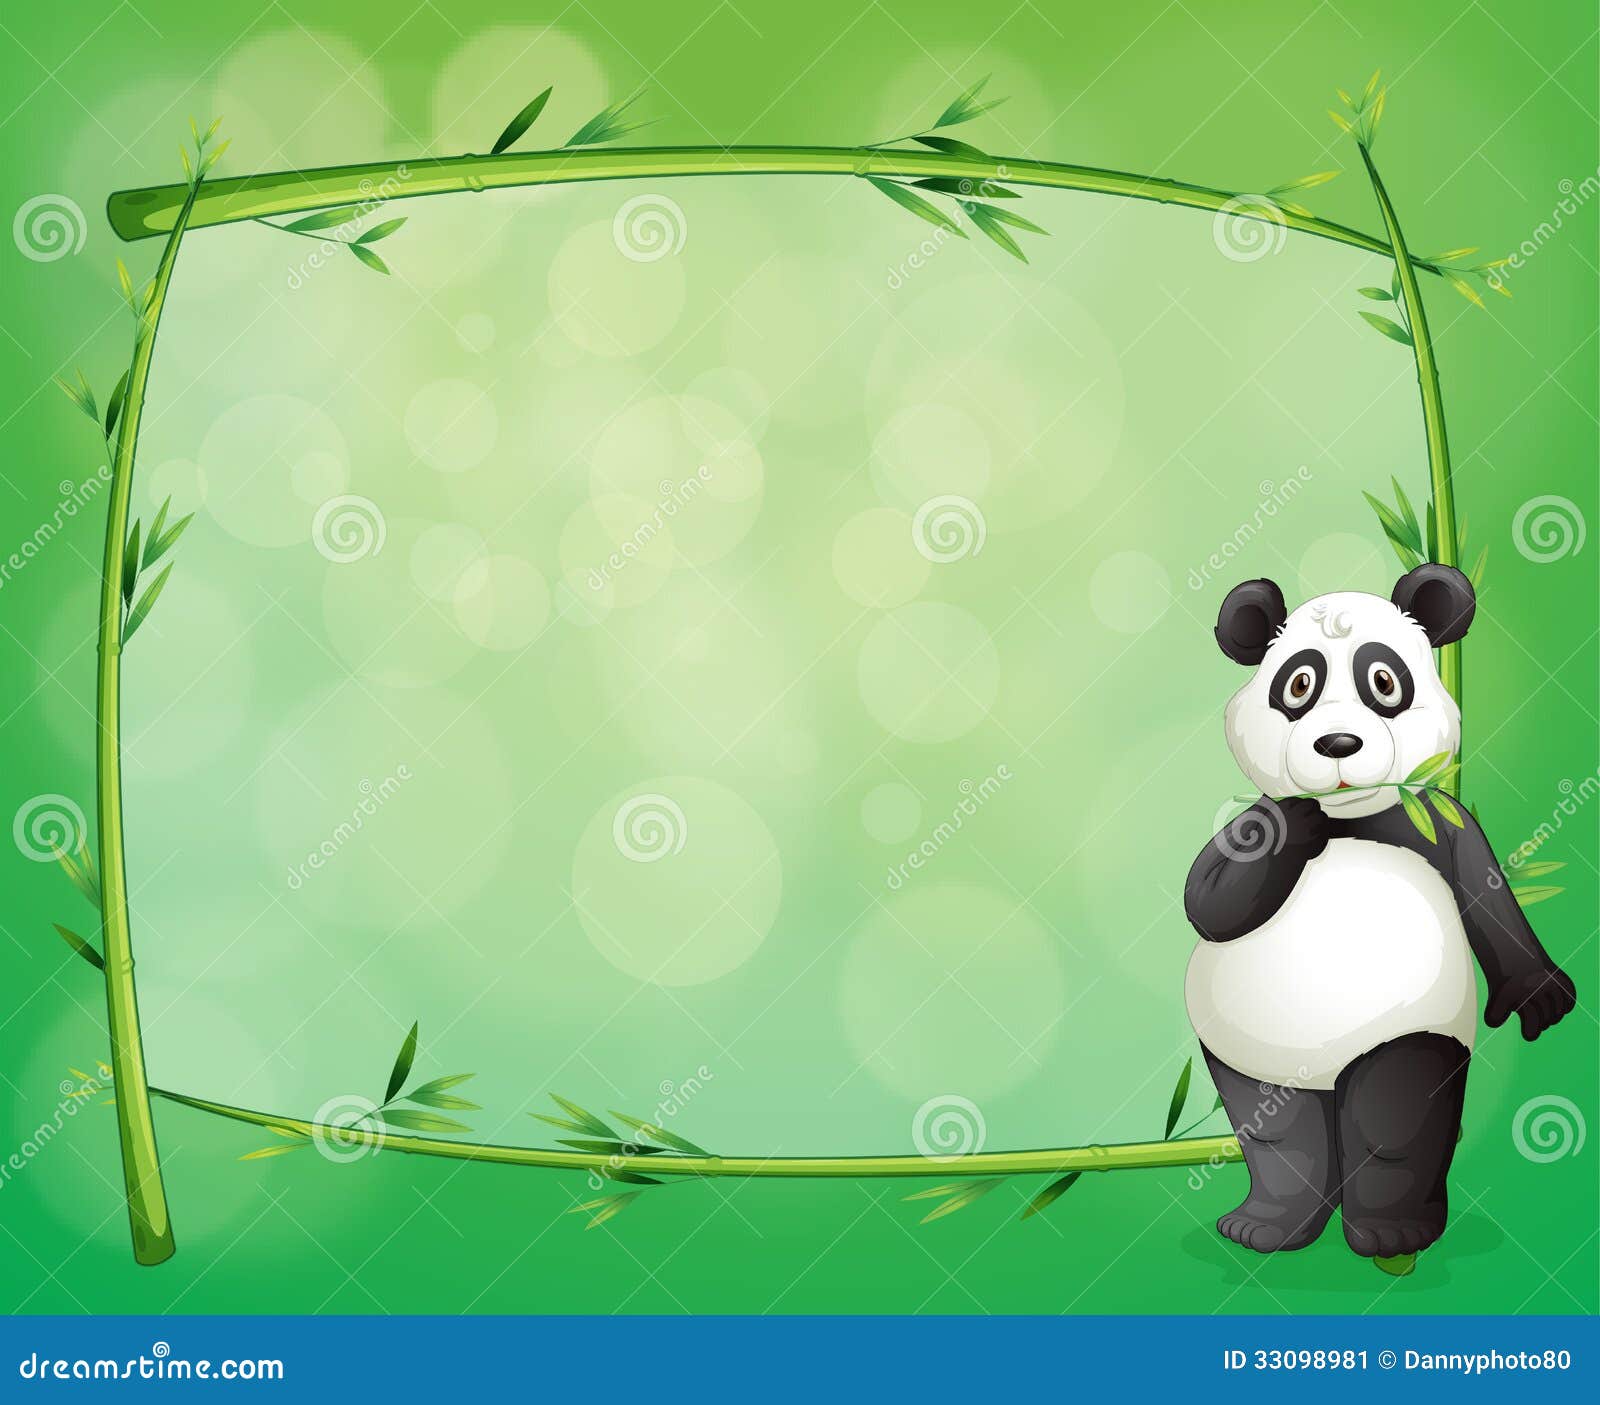 clipart panda frame - photo #29